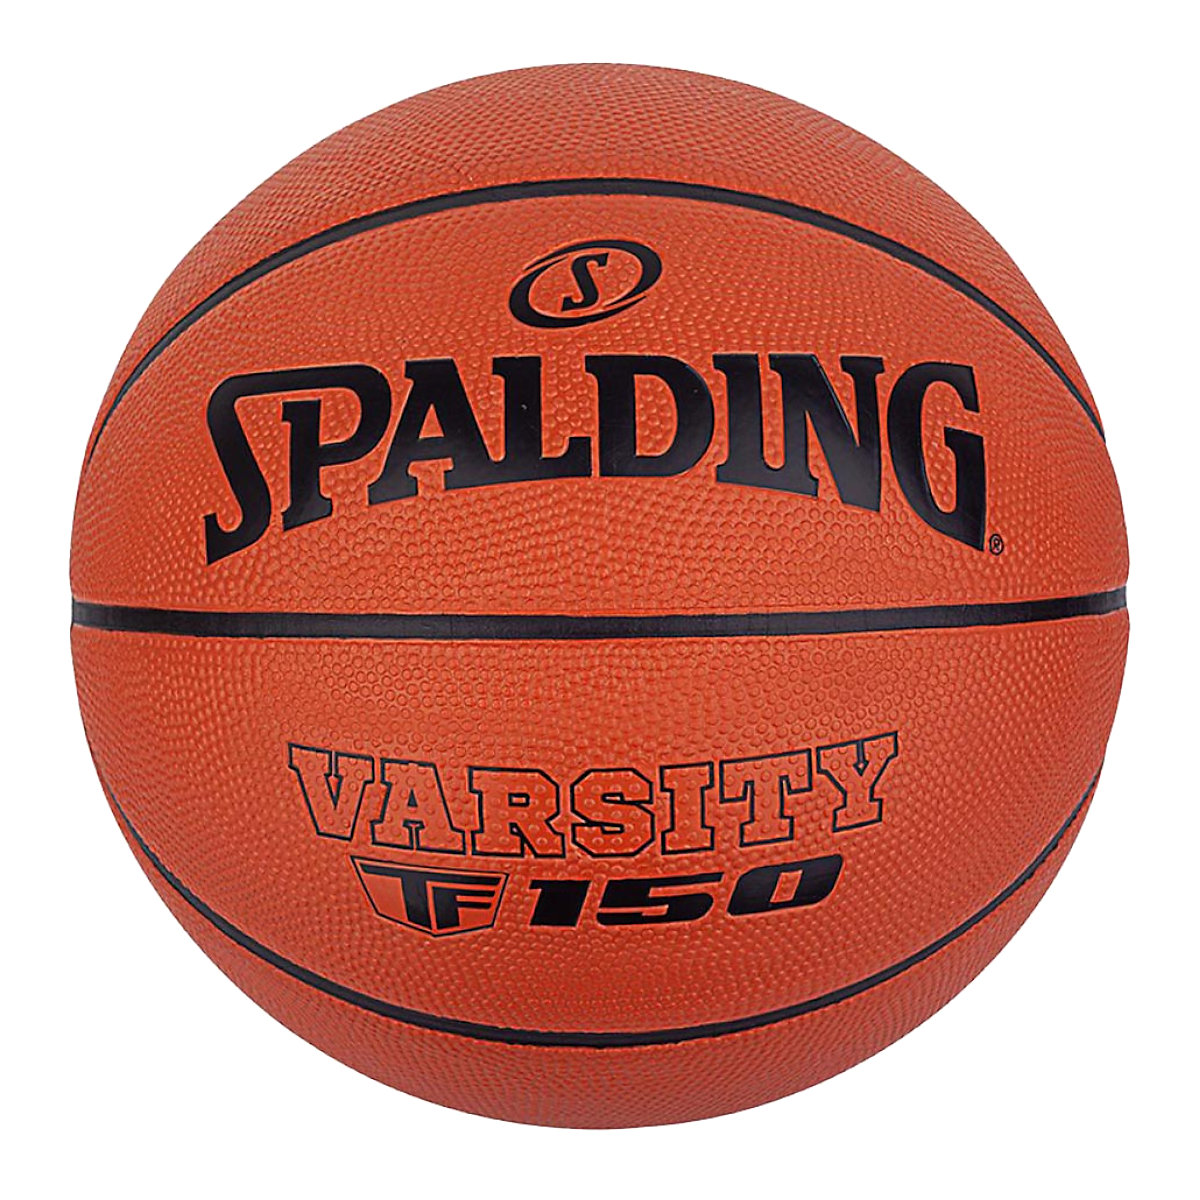 SPALDING Basketballbälle Varsity TF-150 Ball 84324Z Basketbälle für Kinder